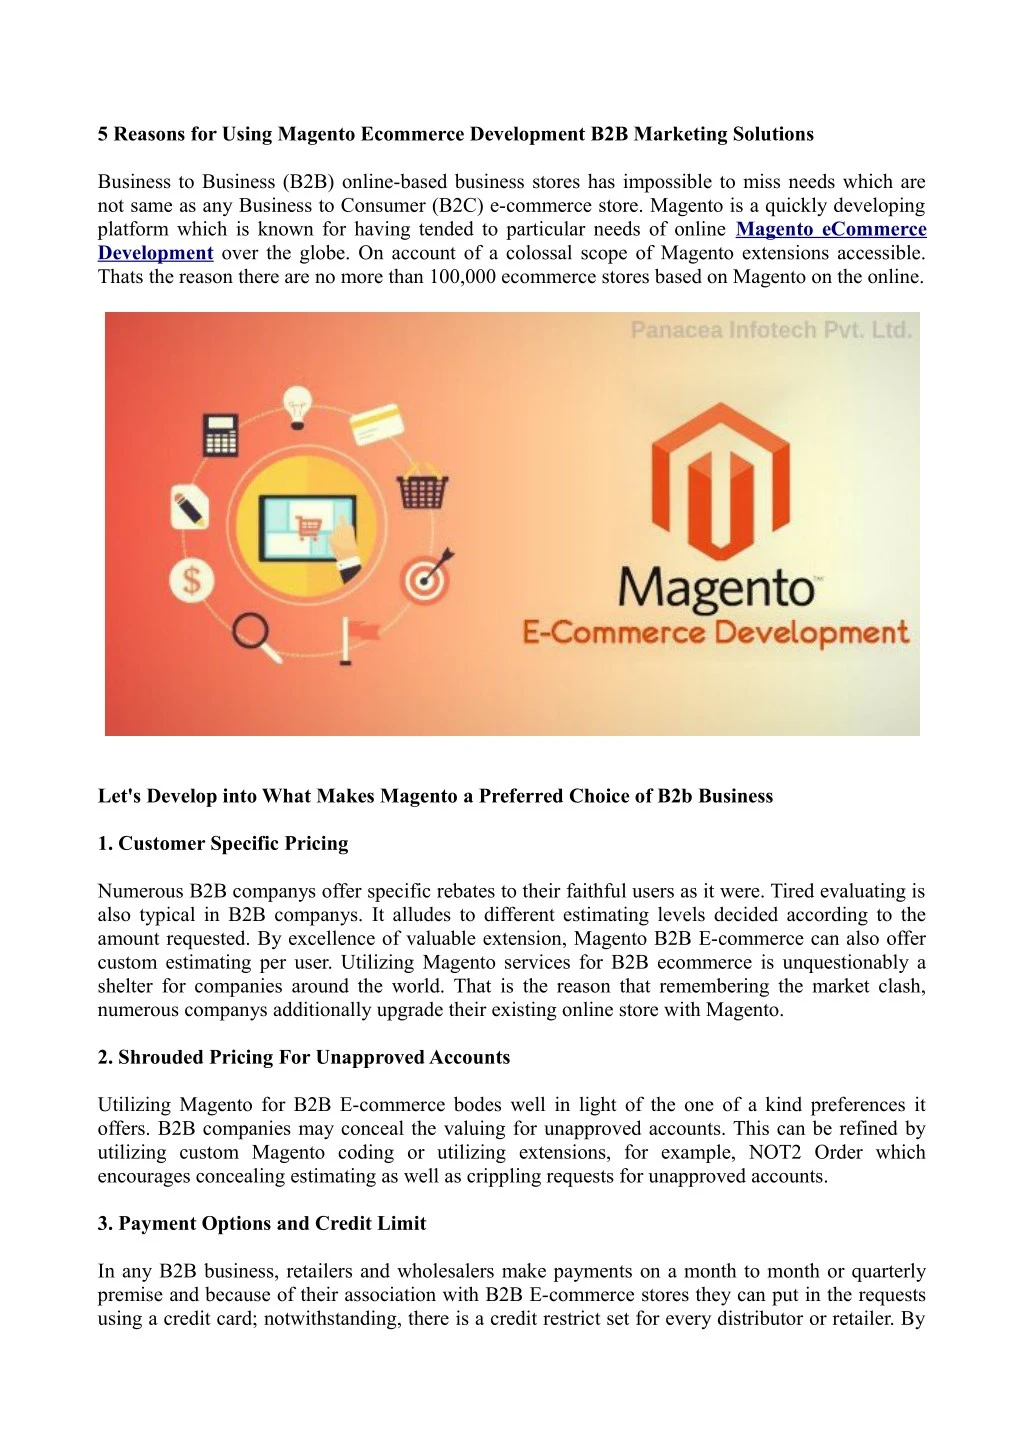 5 reasons for using magento ecommerce development